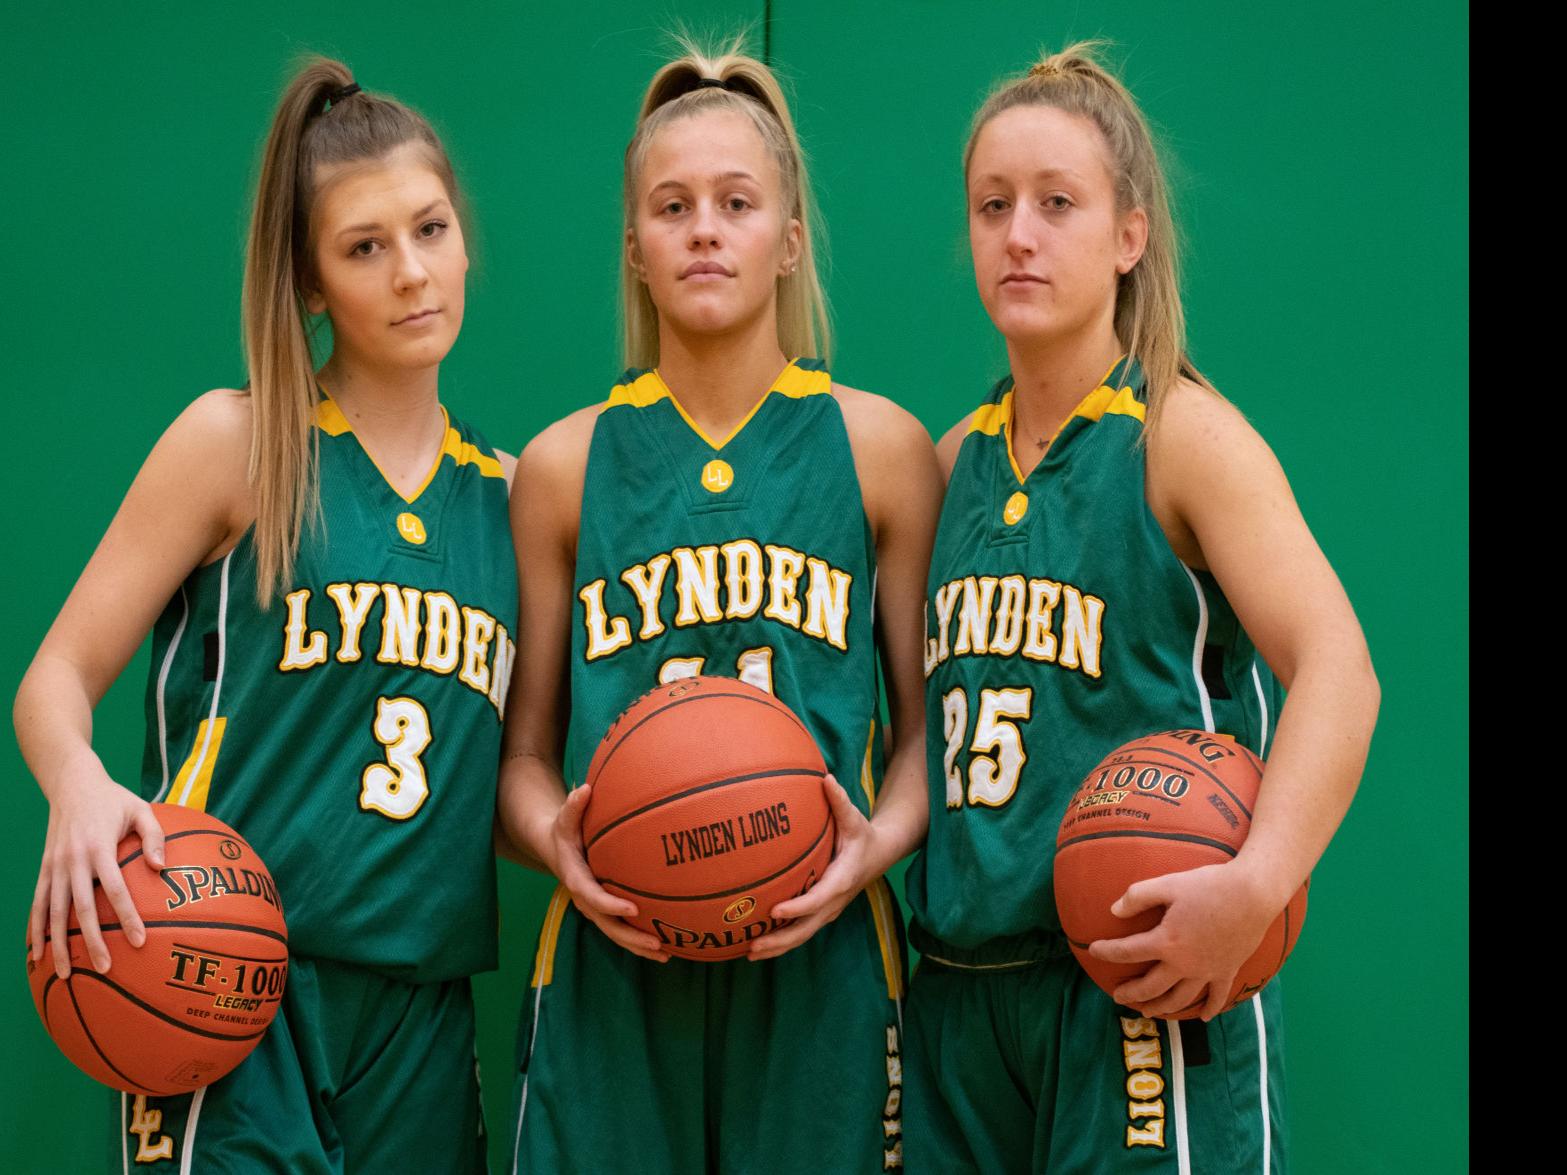 Lynden - Team Home Lynden Lions Sports